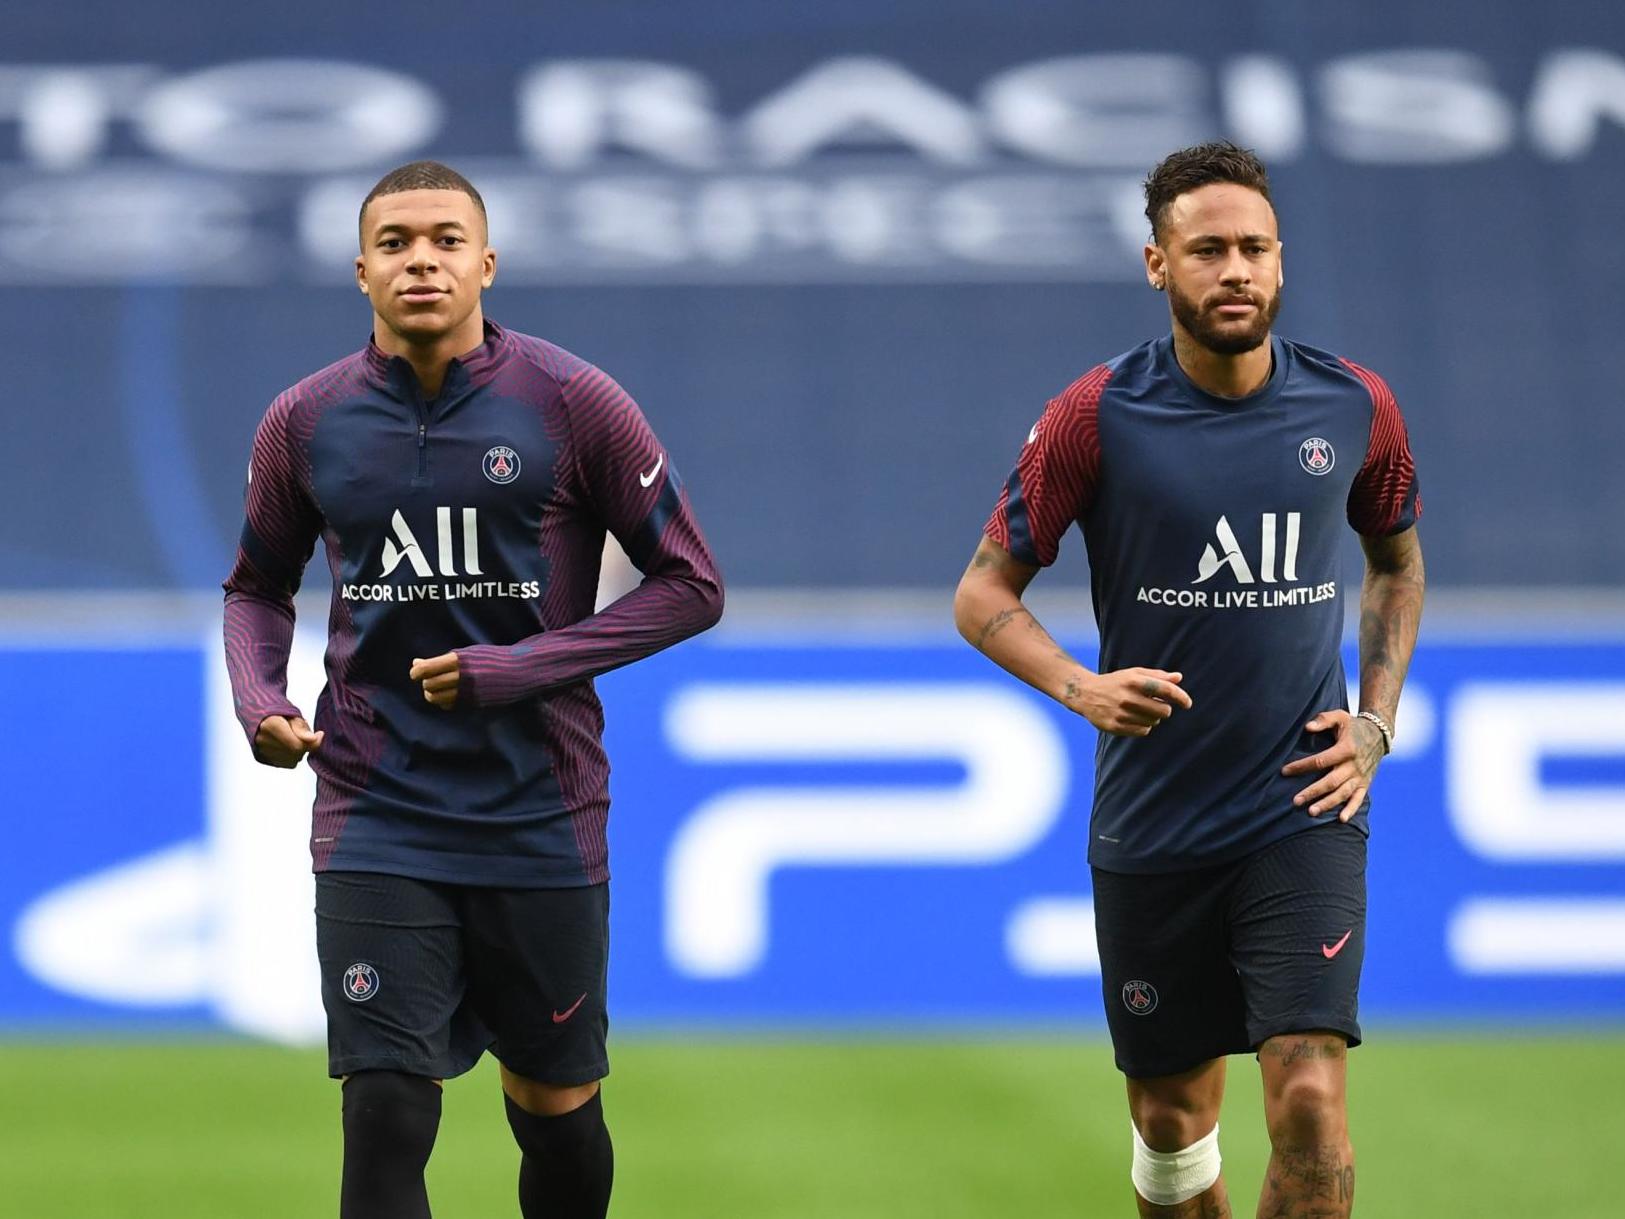 Paris Saint-Germain's Neymar and Kylian Mbappe